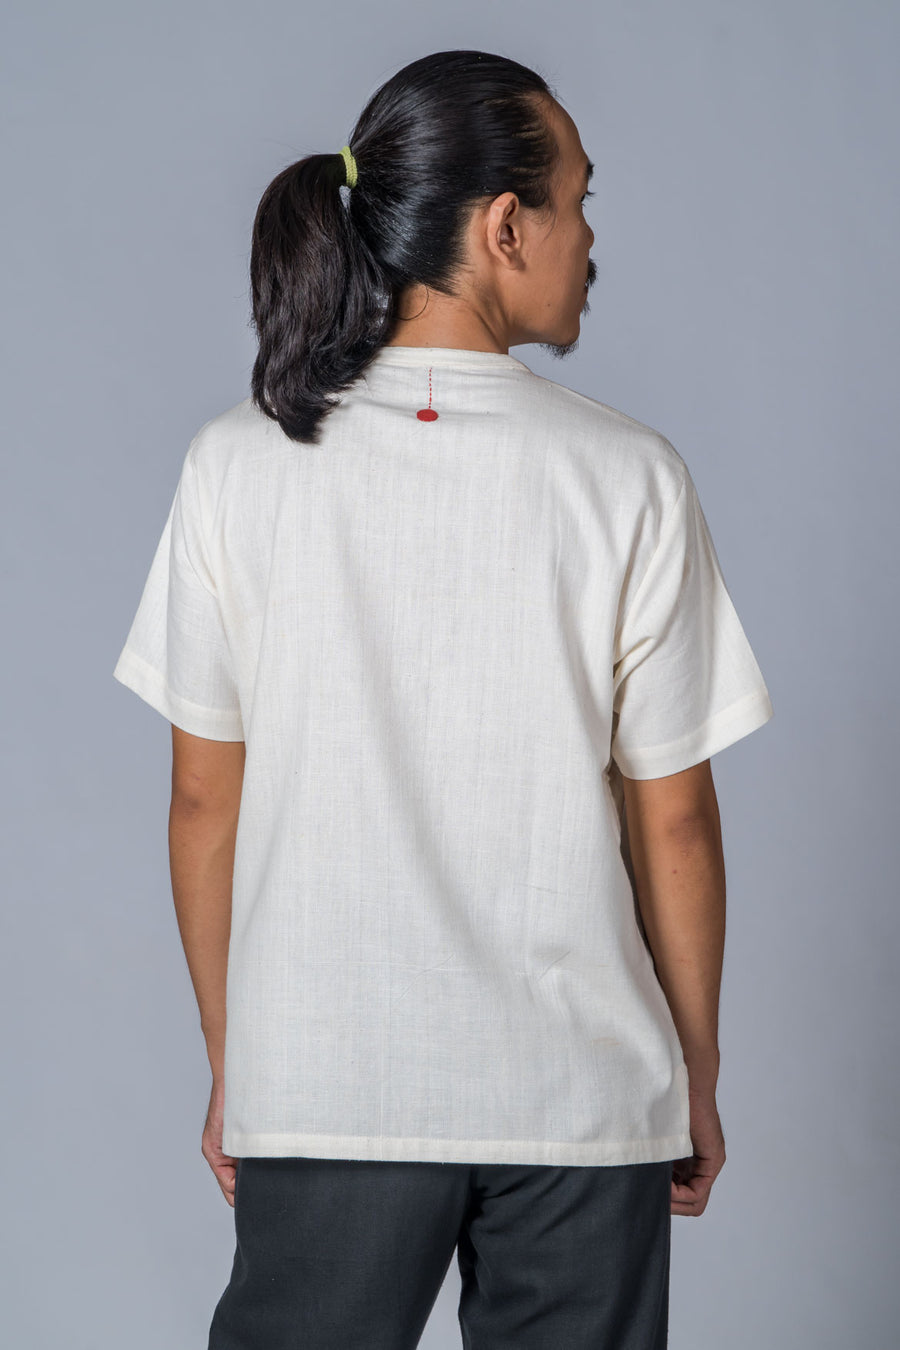 Off-White handwoven Shirt- MANAV - Upasana Design Studio